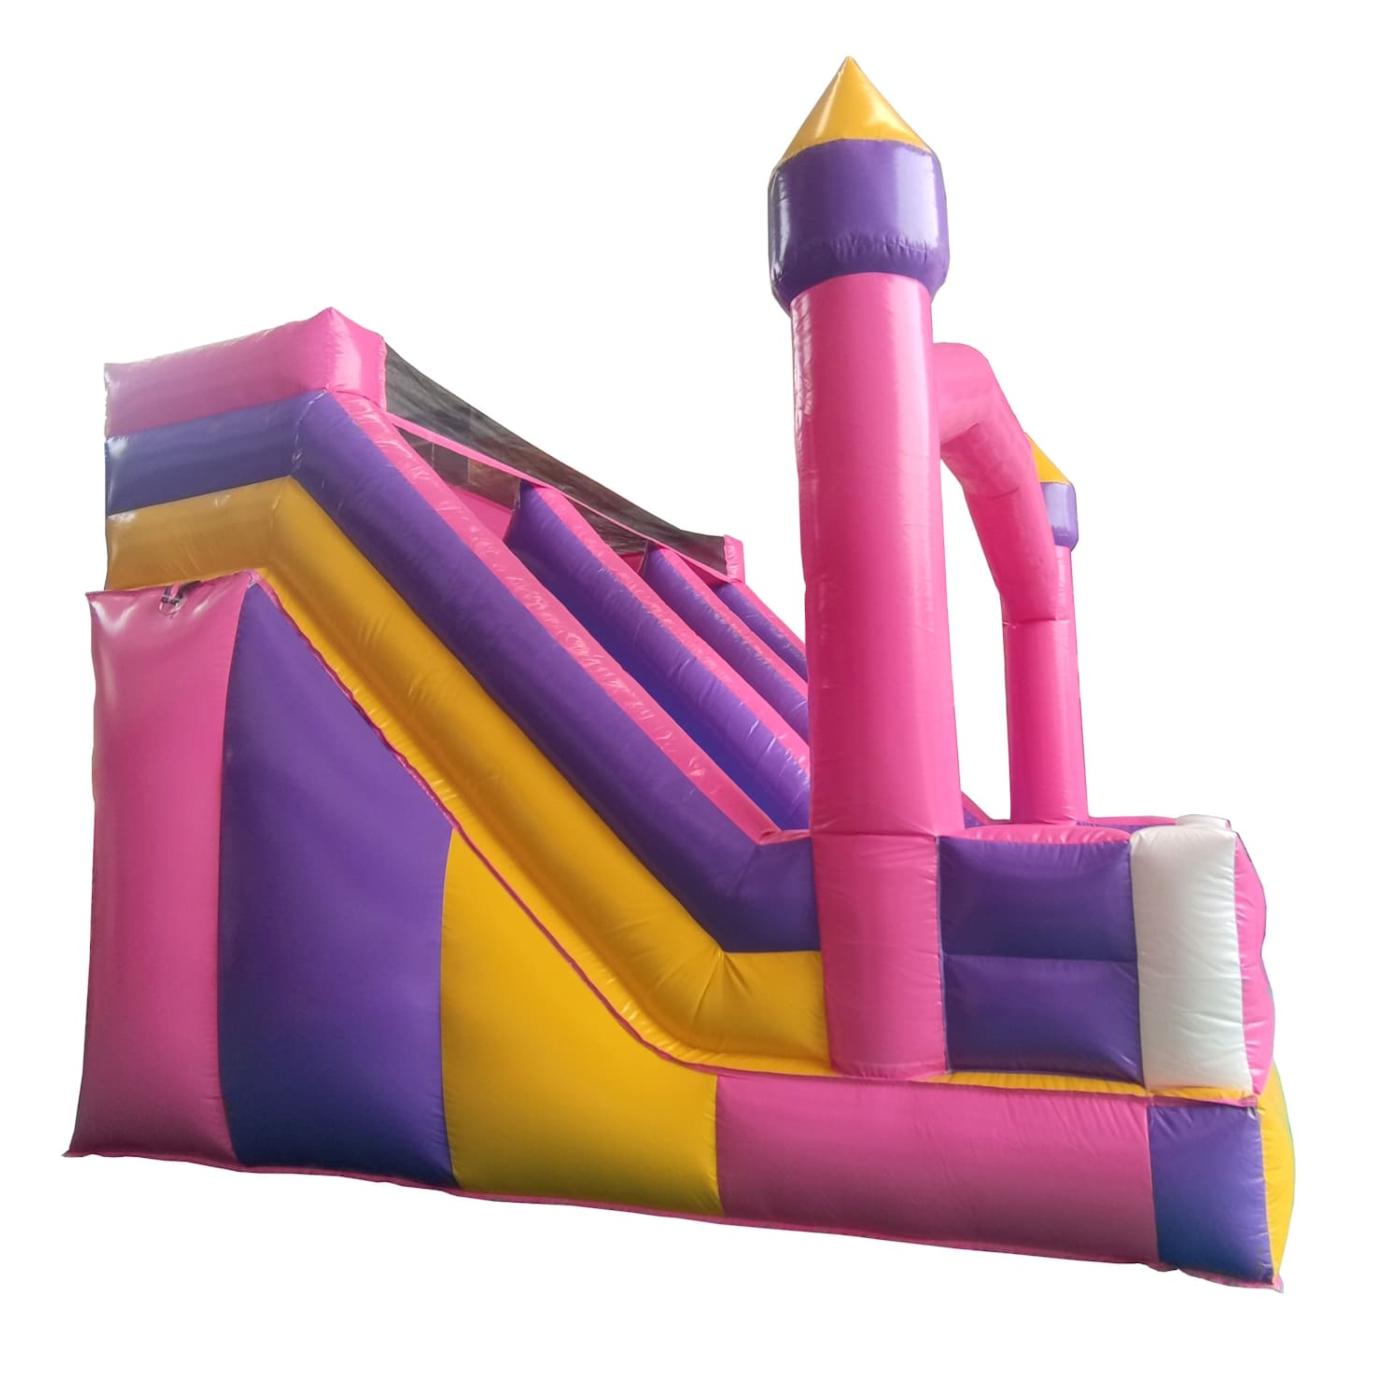 Insuflavel Double Slide Fun Pink Castle